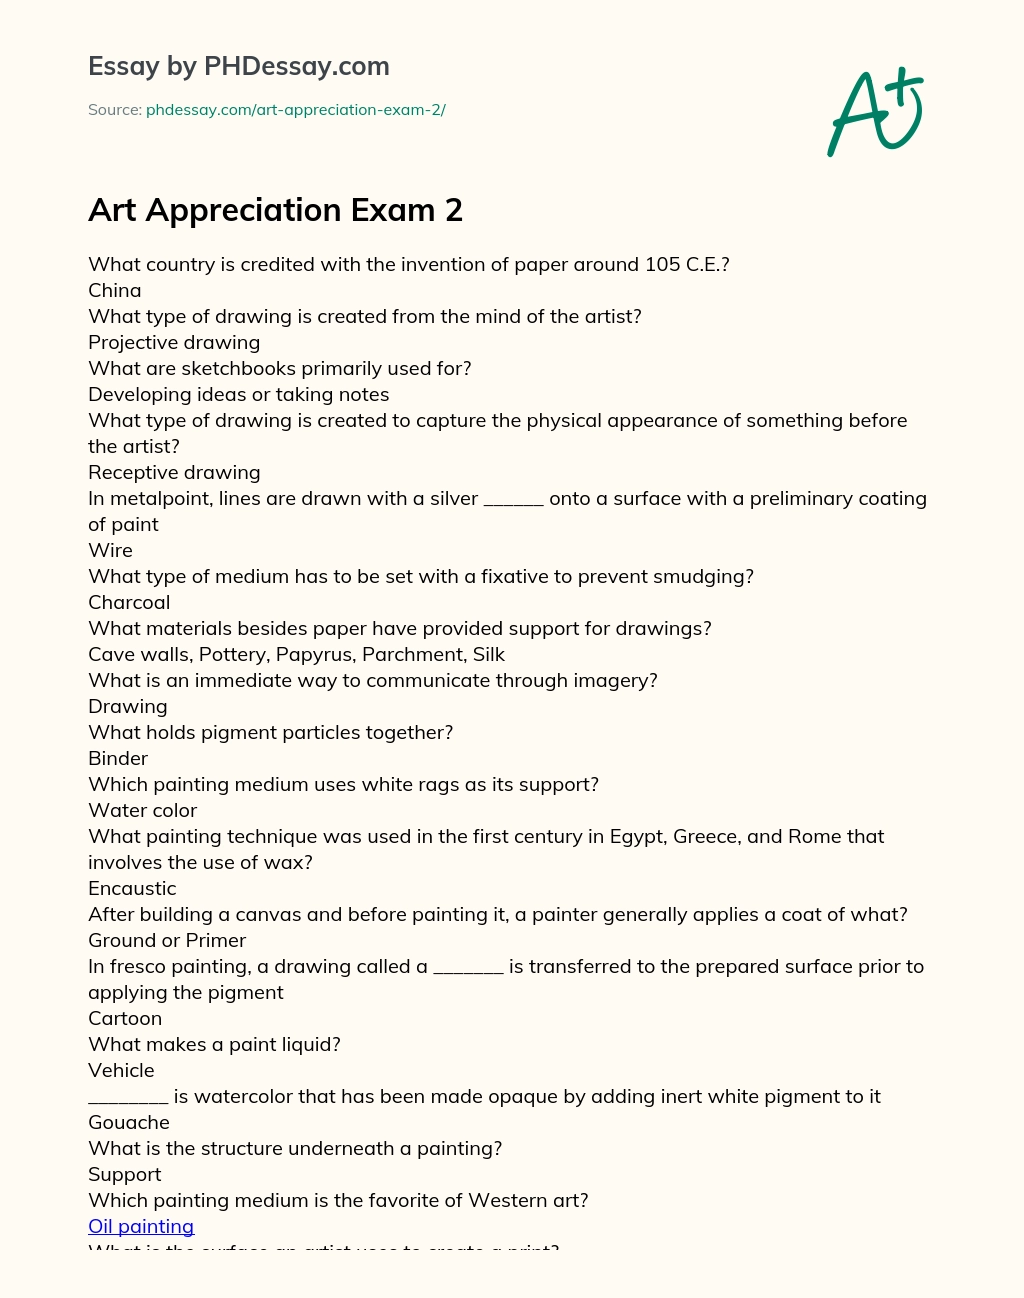 Art Appreciation Exam 2 essay